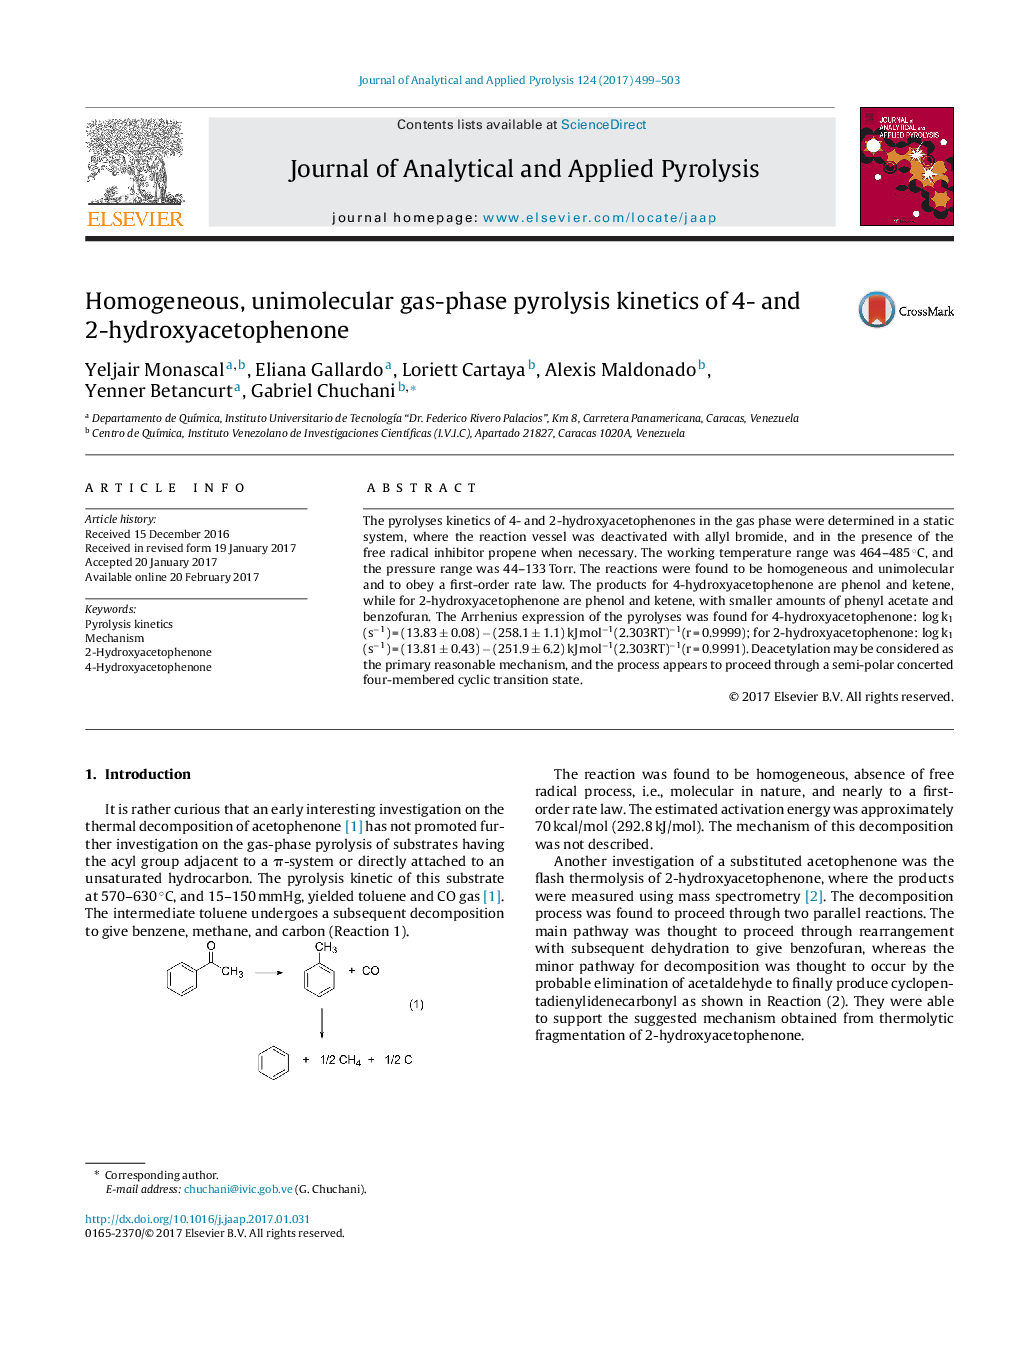 Homogeneous, unimolecular gas-phase pyrolysis kinetics of 4- and 2-hydroxyacetophenone